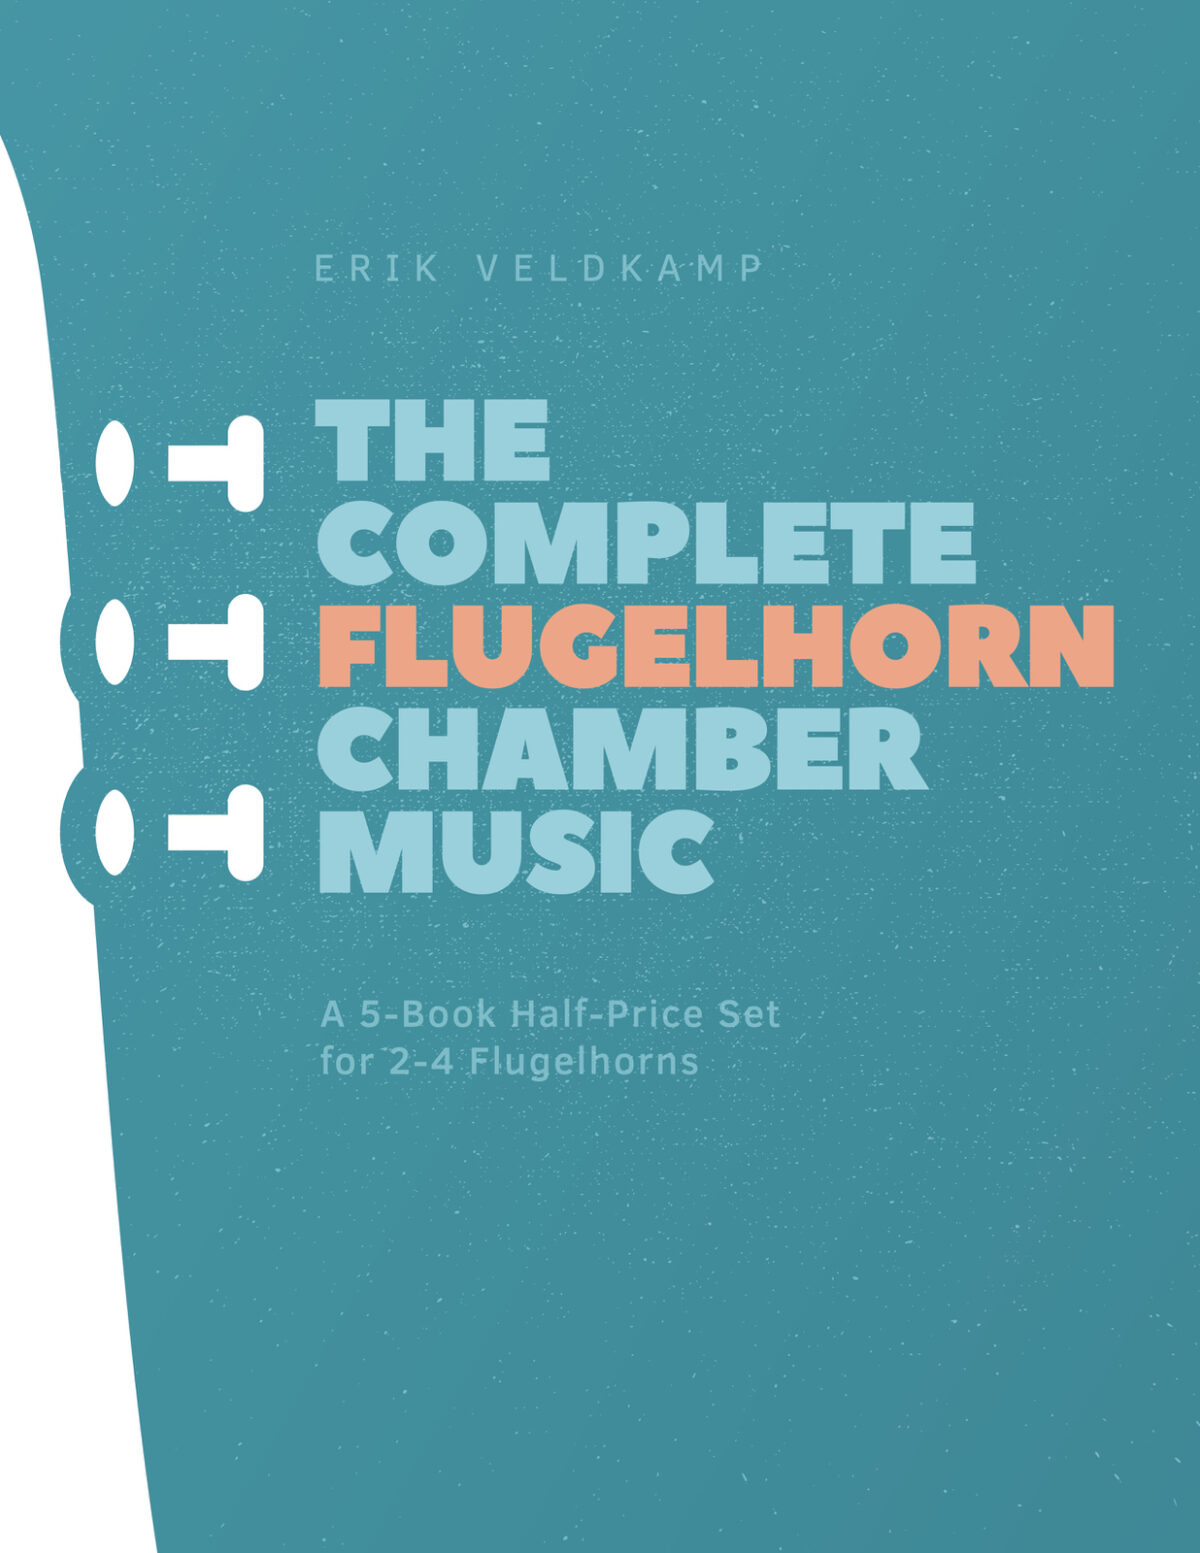 The Complete Flugelhorn Chamber Music